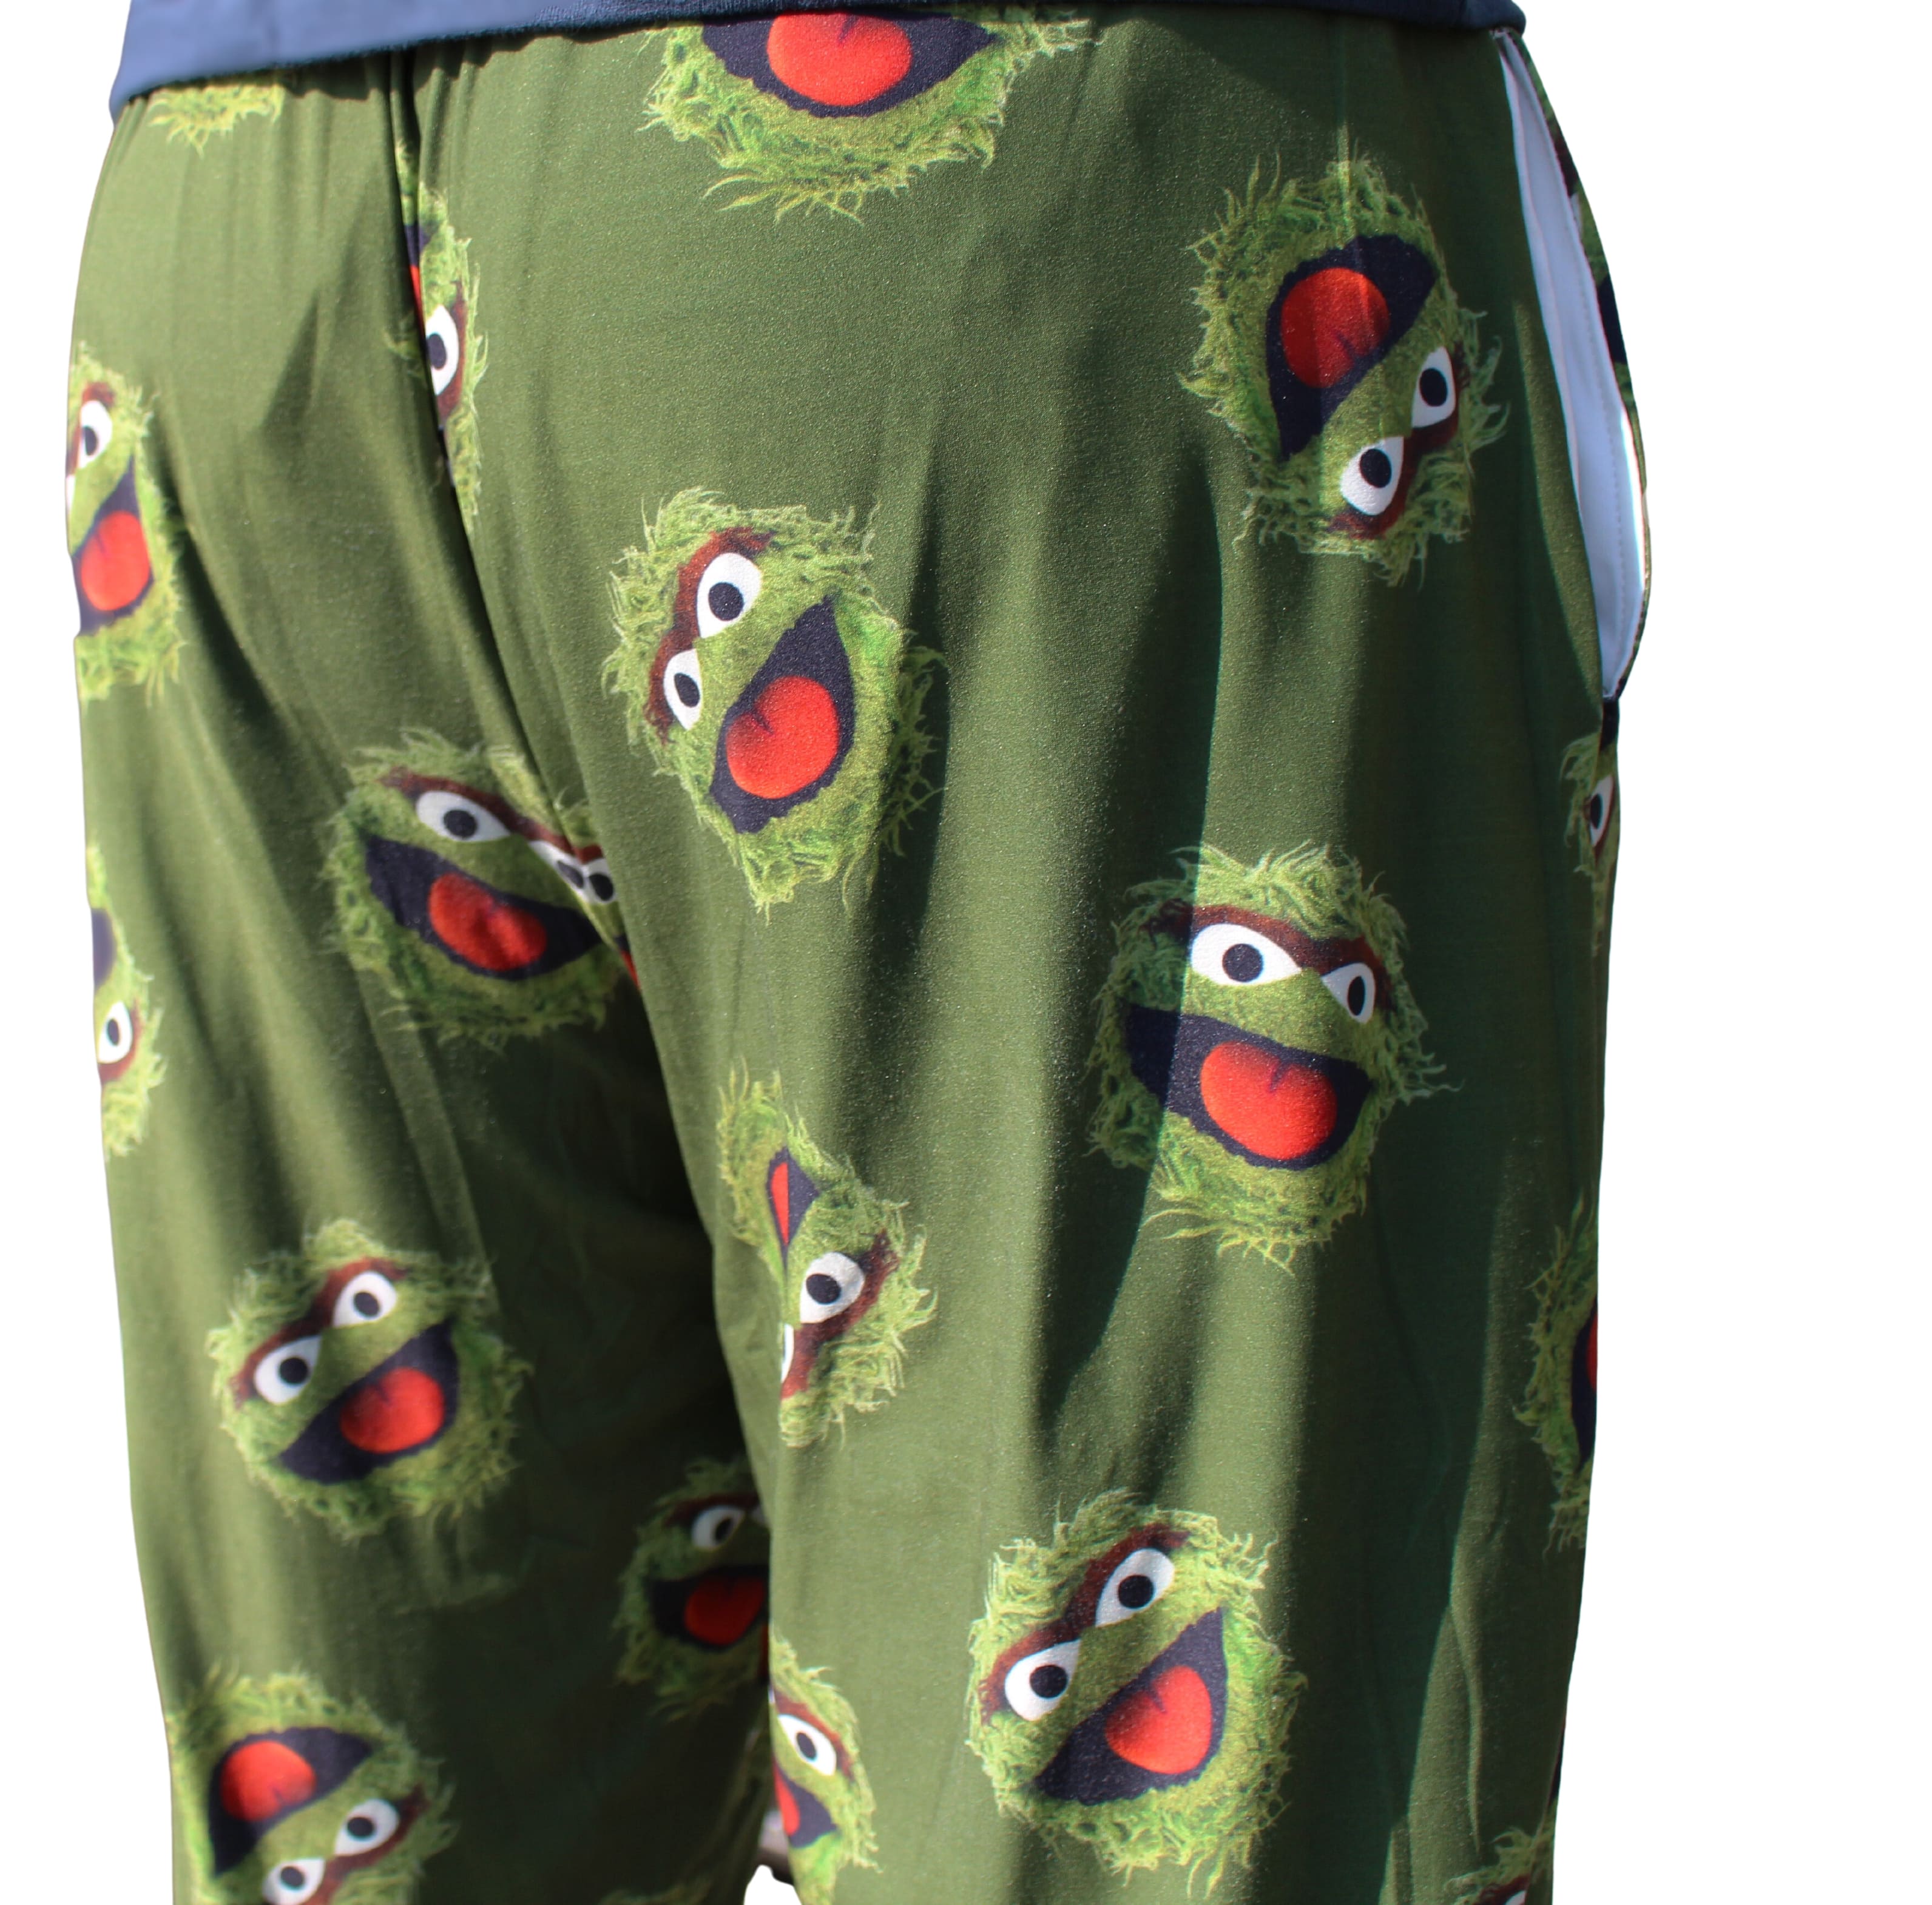 Trash Talker Pajama Lounge Pants on model back view close up (waist down)